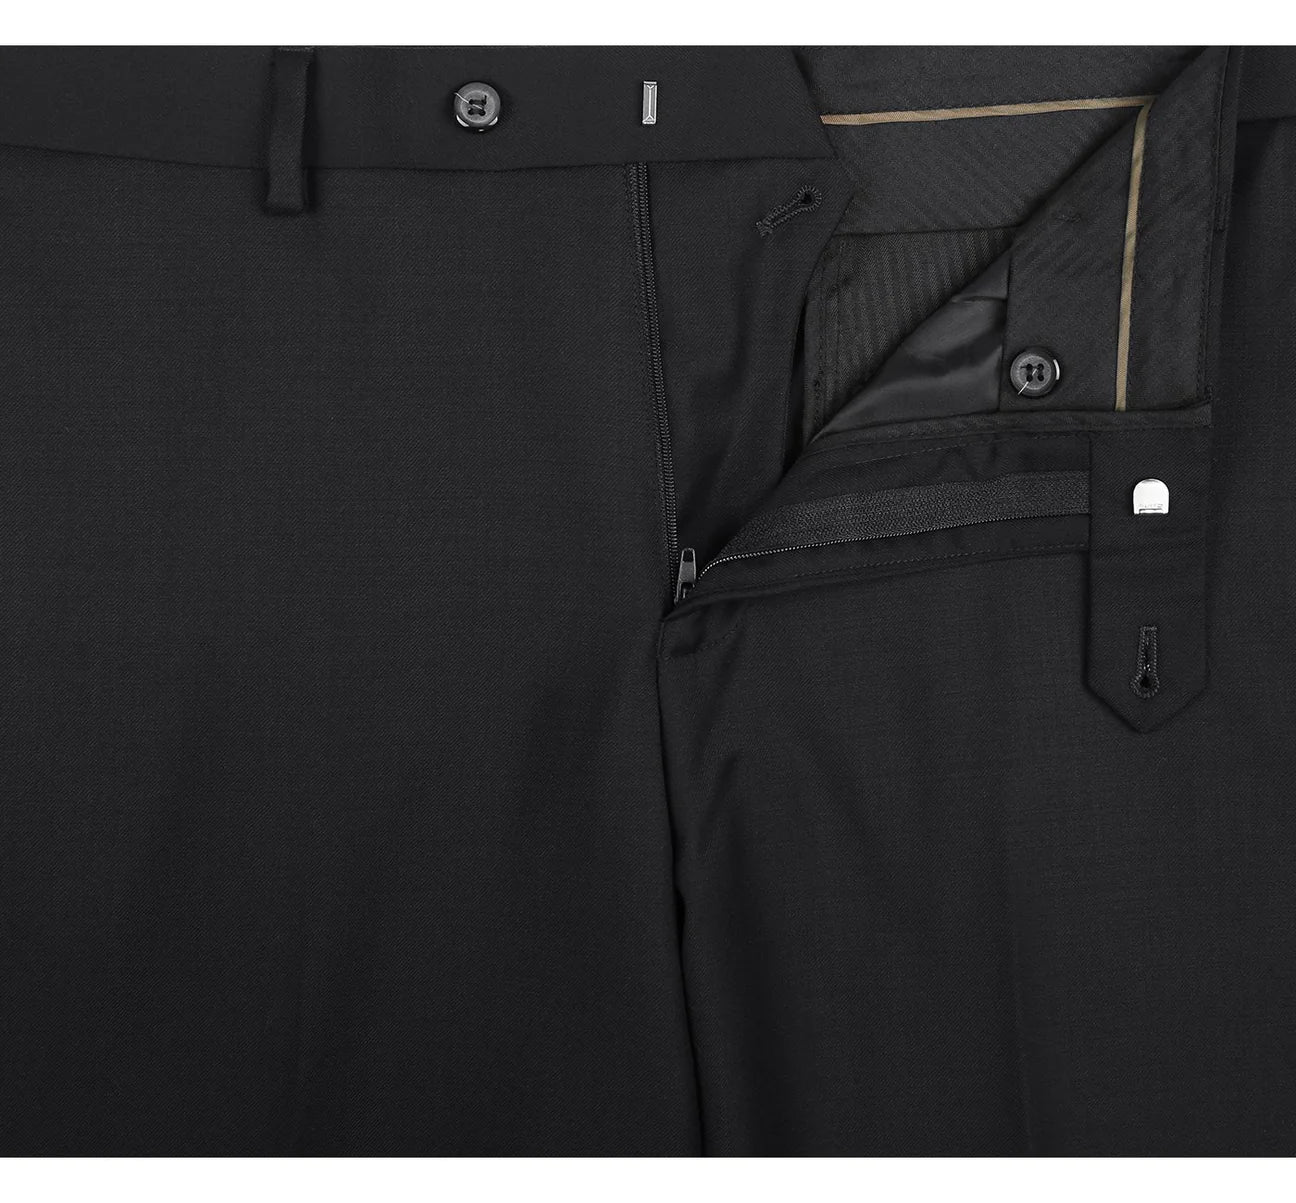 Renoir Black Classic Fit 100% Virgin Wool suit slacks 508-1